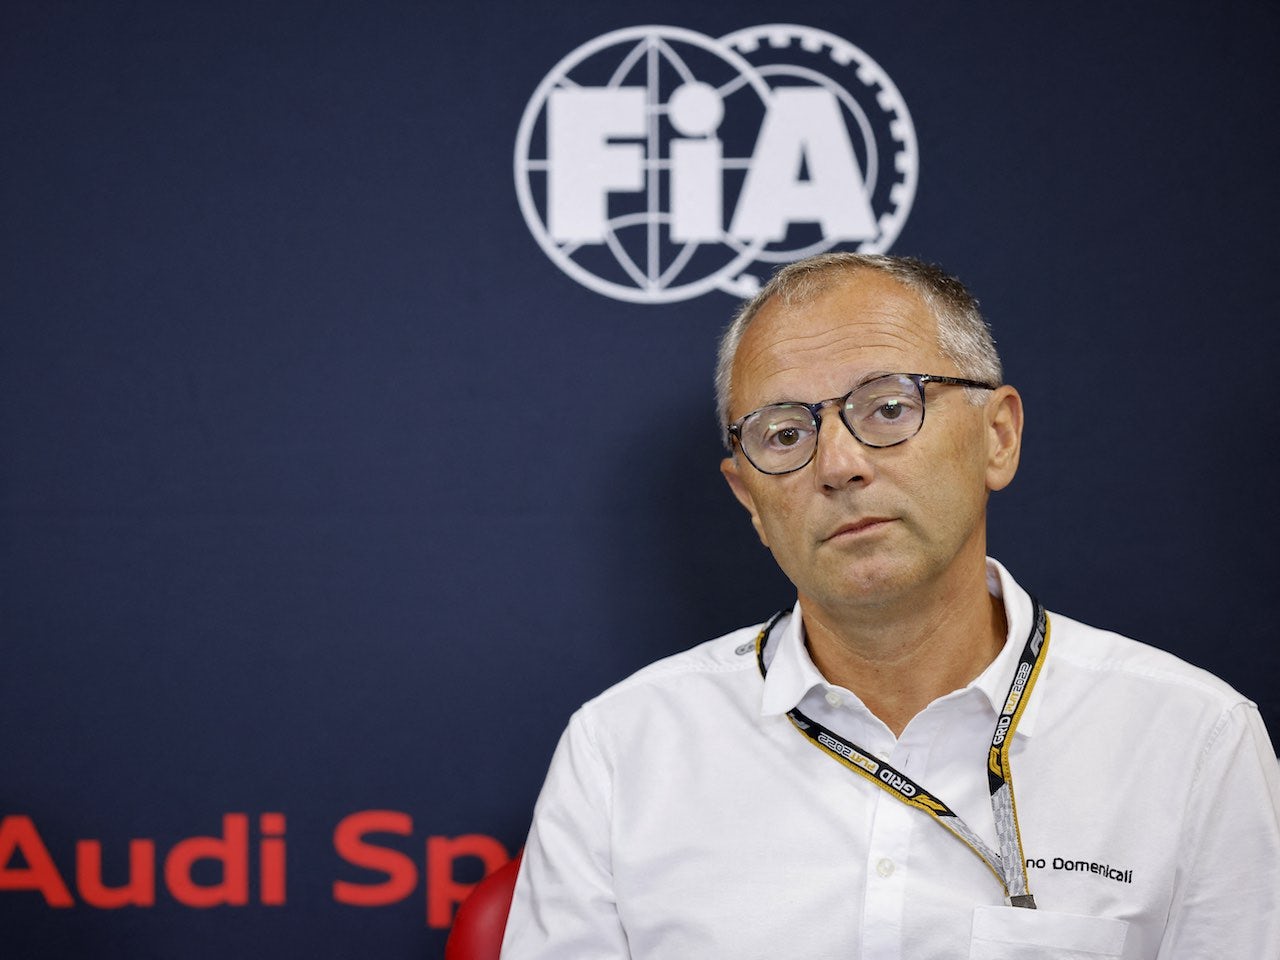 Rival Madrid, Barcelona bids good for Spanish GP - CEO 